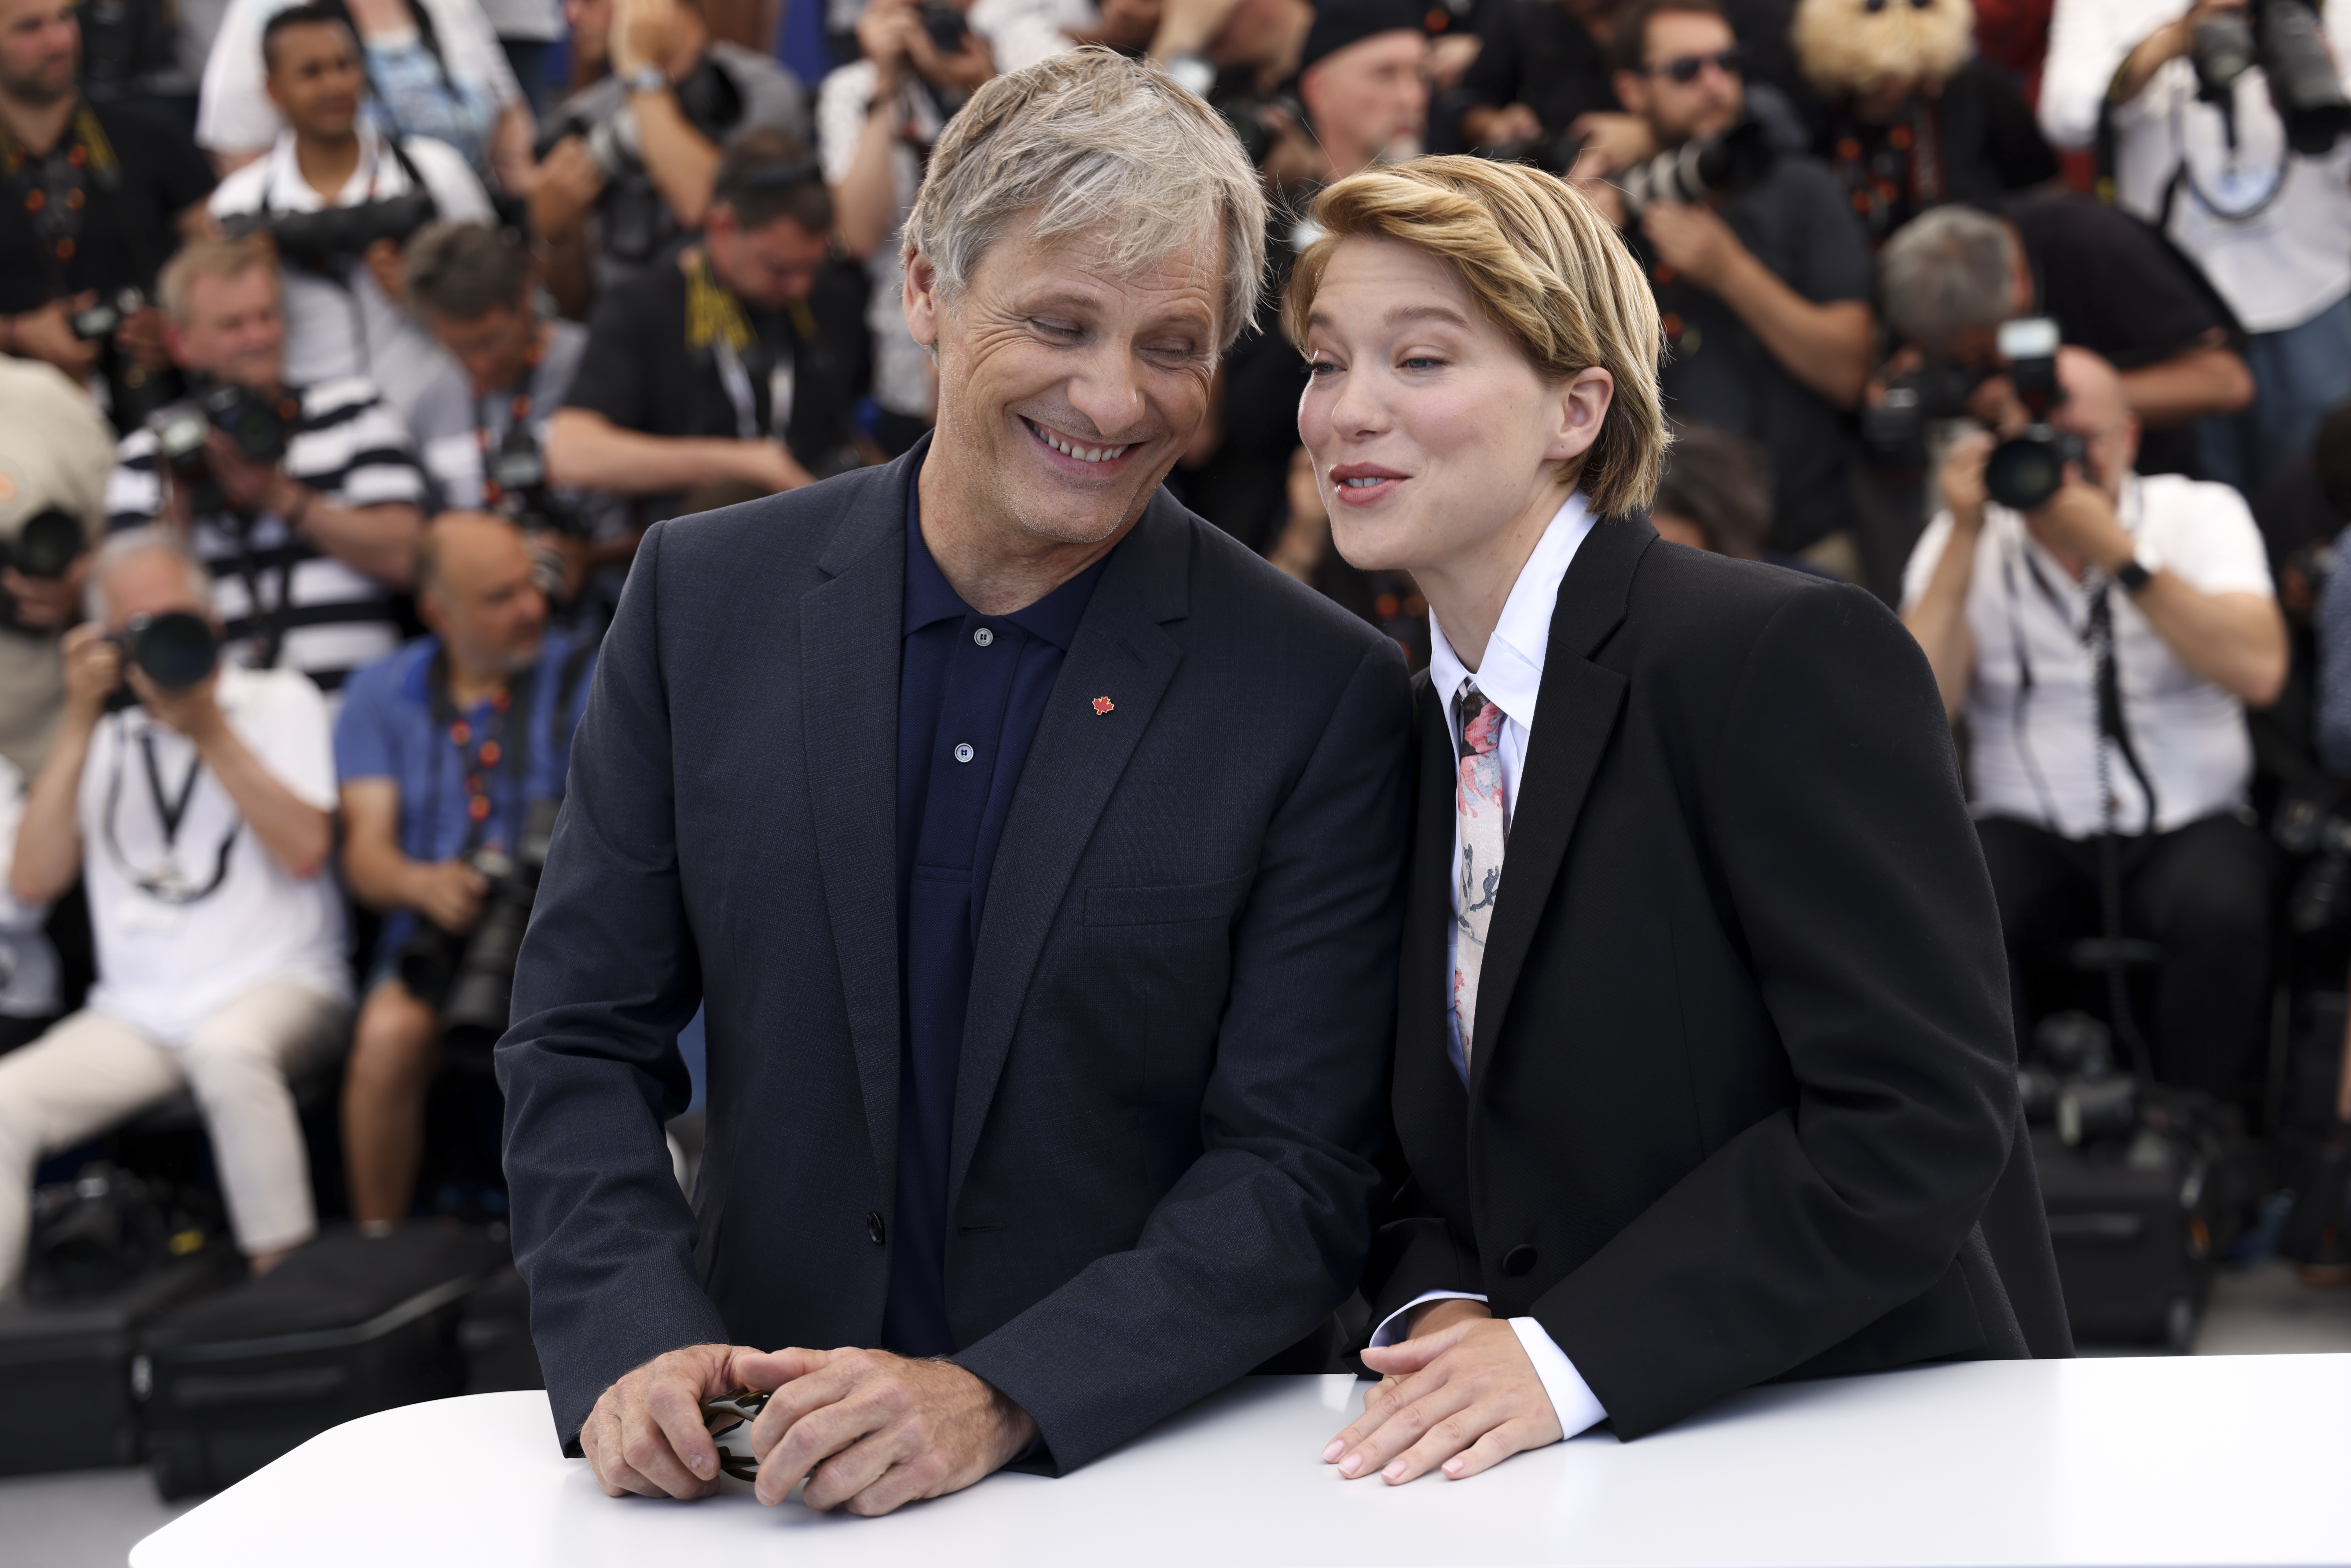 Cannes: Léa Seydoux on 'Crimes,' Compulsion and Nicolas Ghesquière – WWD